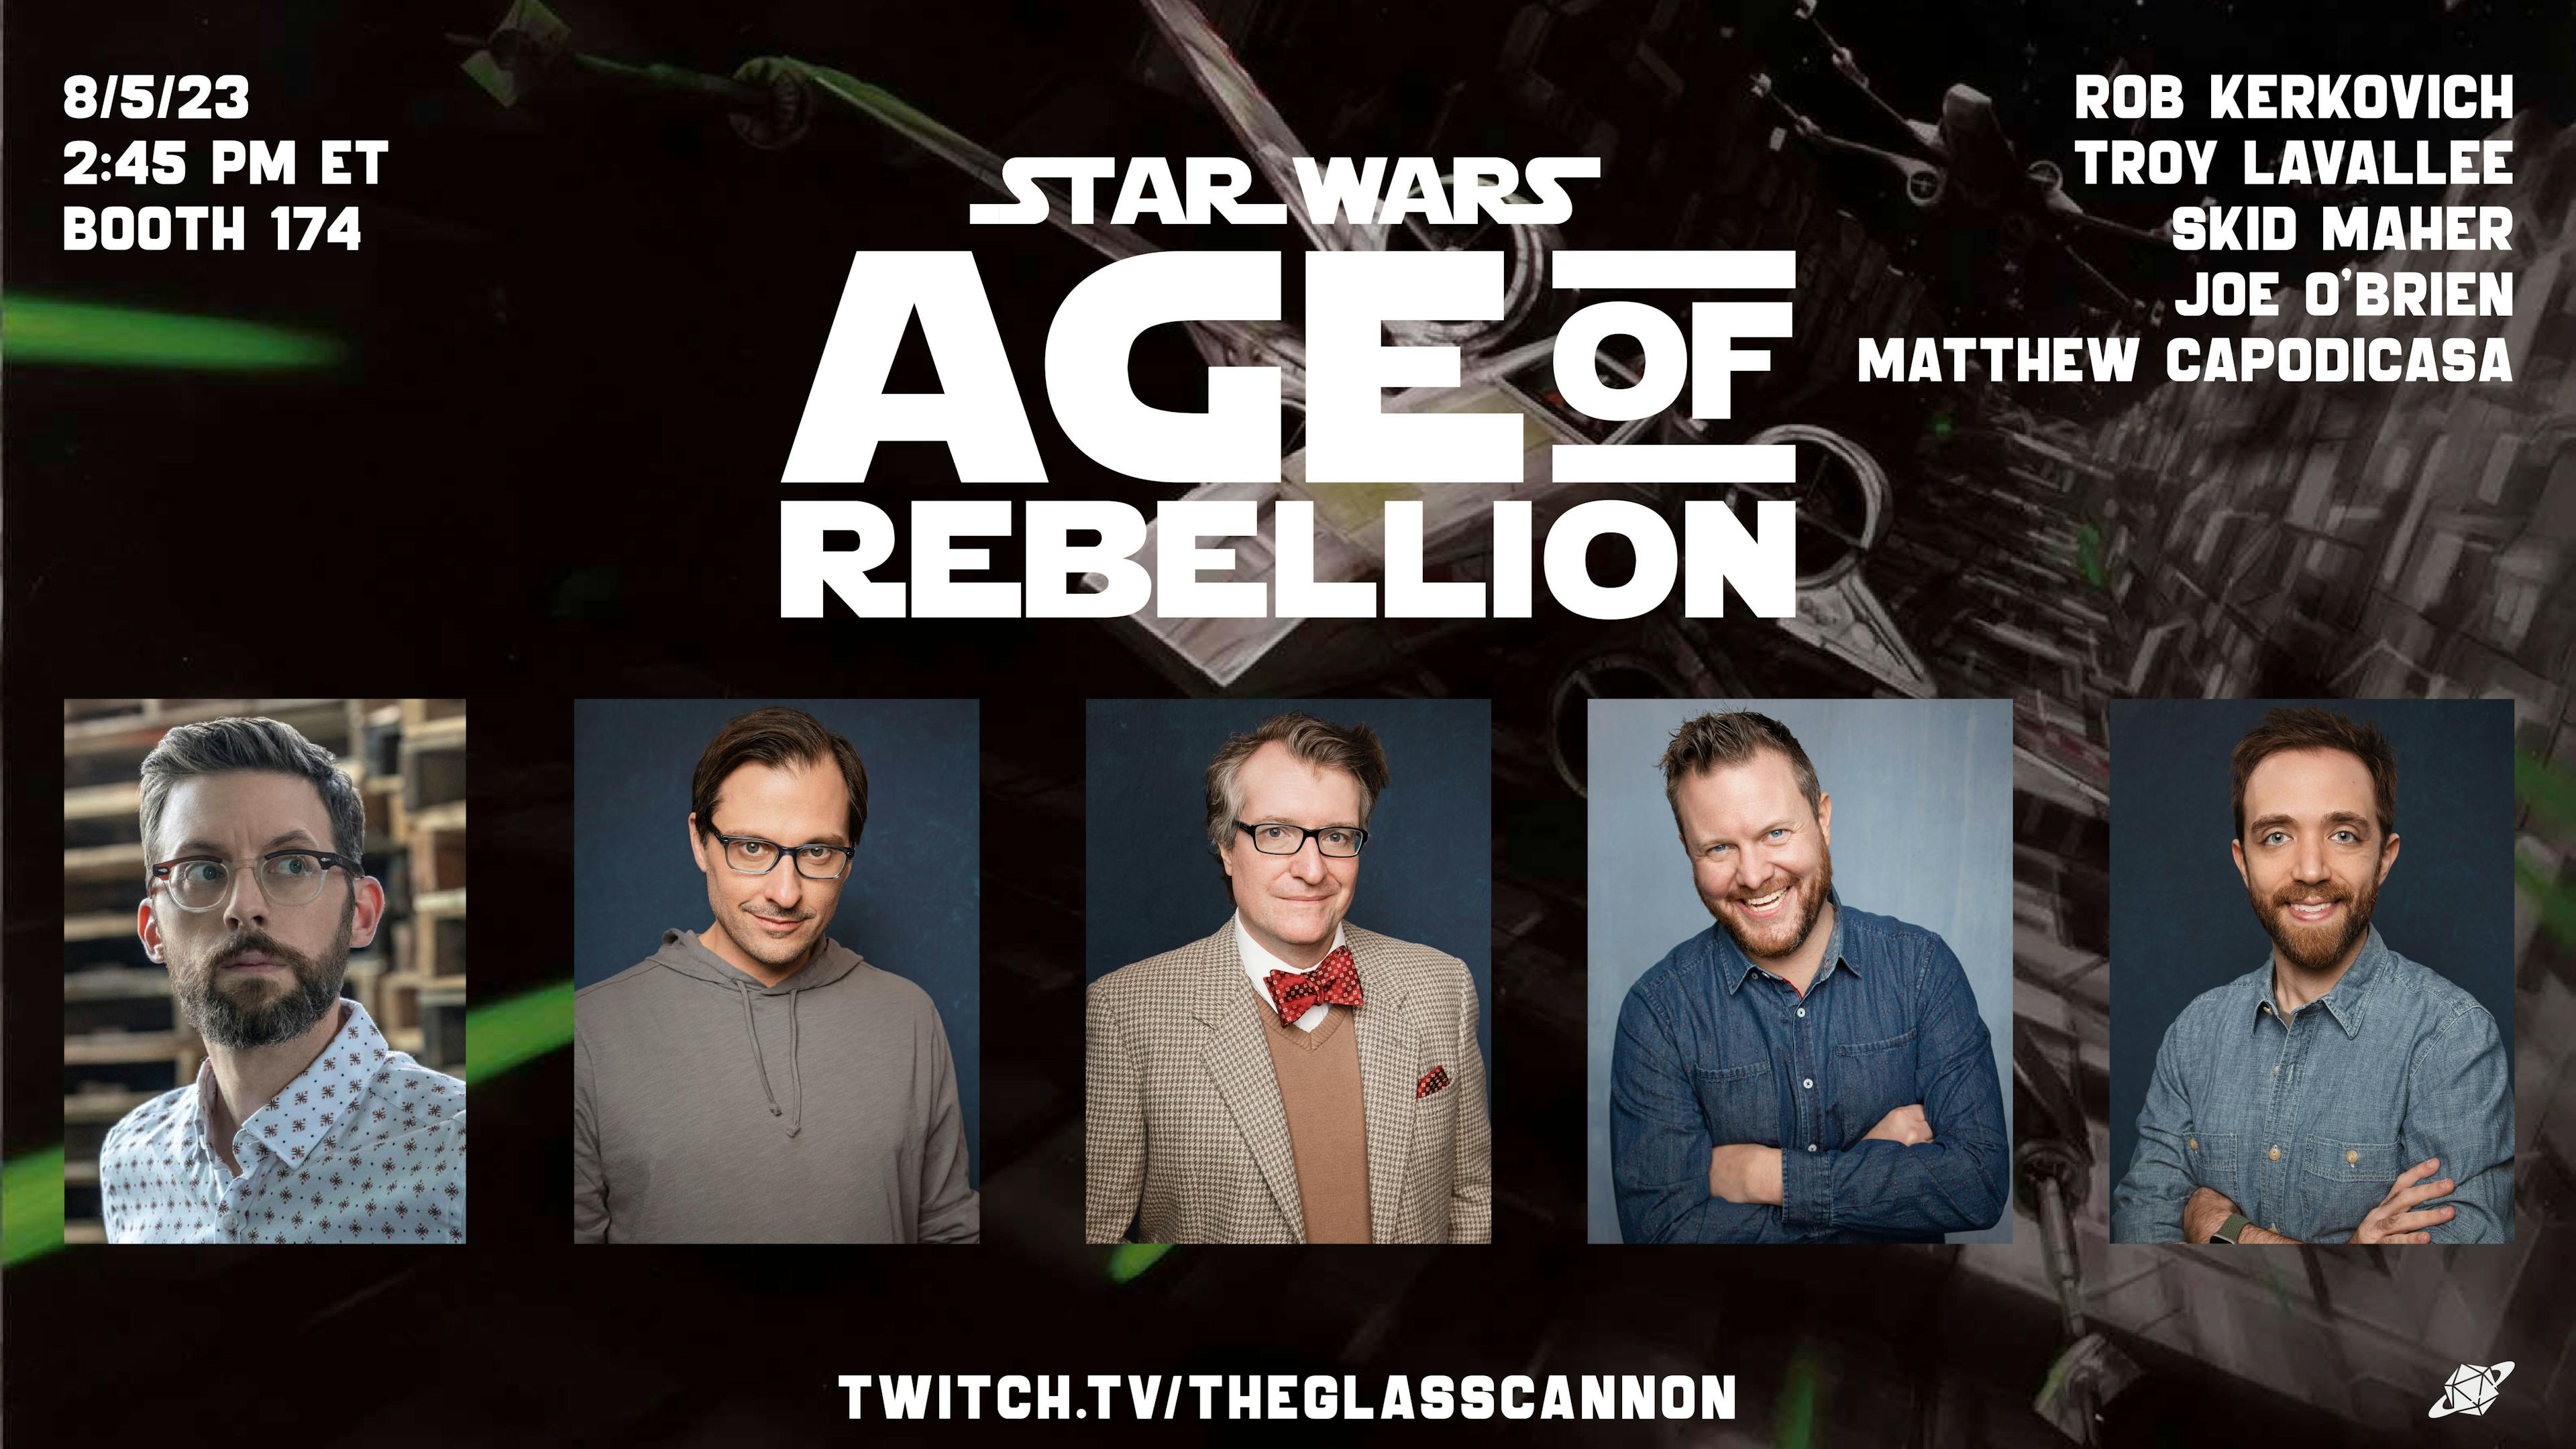 Star War - Age of rebellion2.jpg